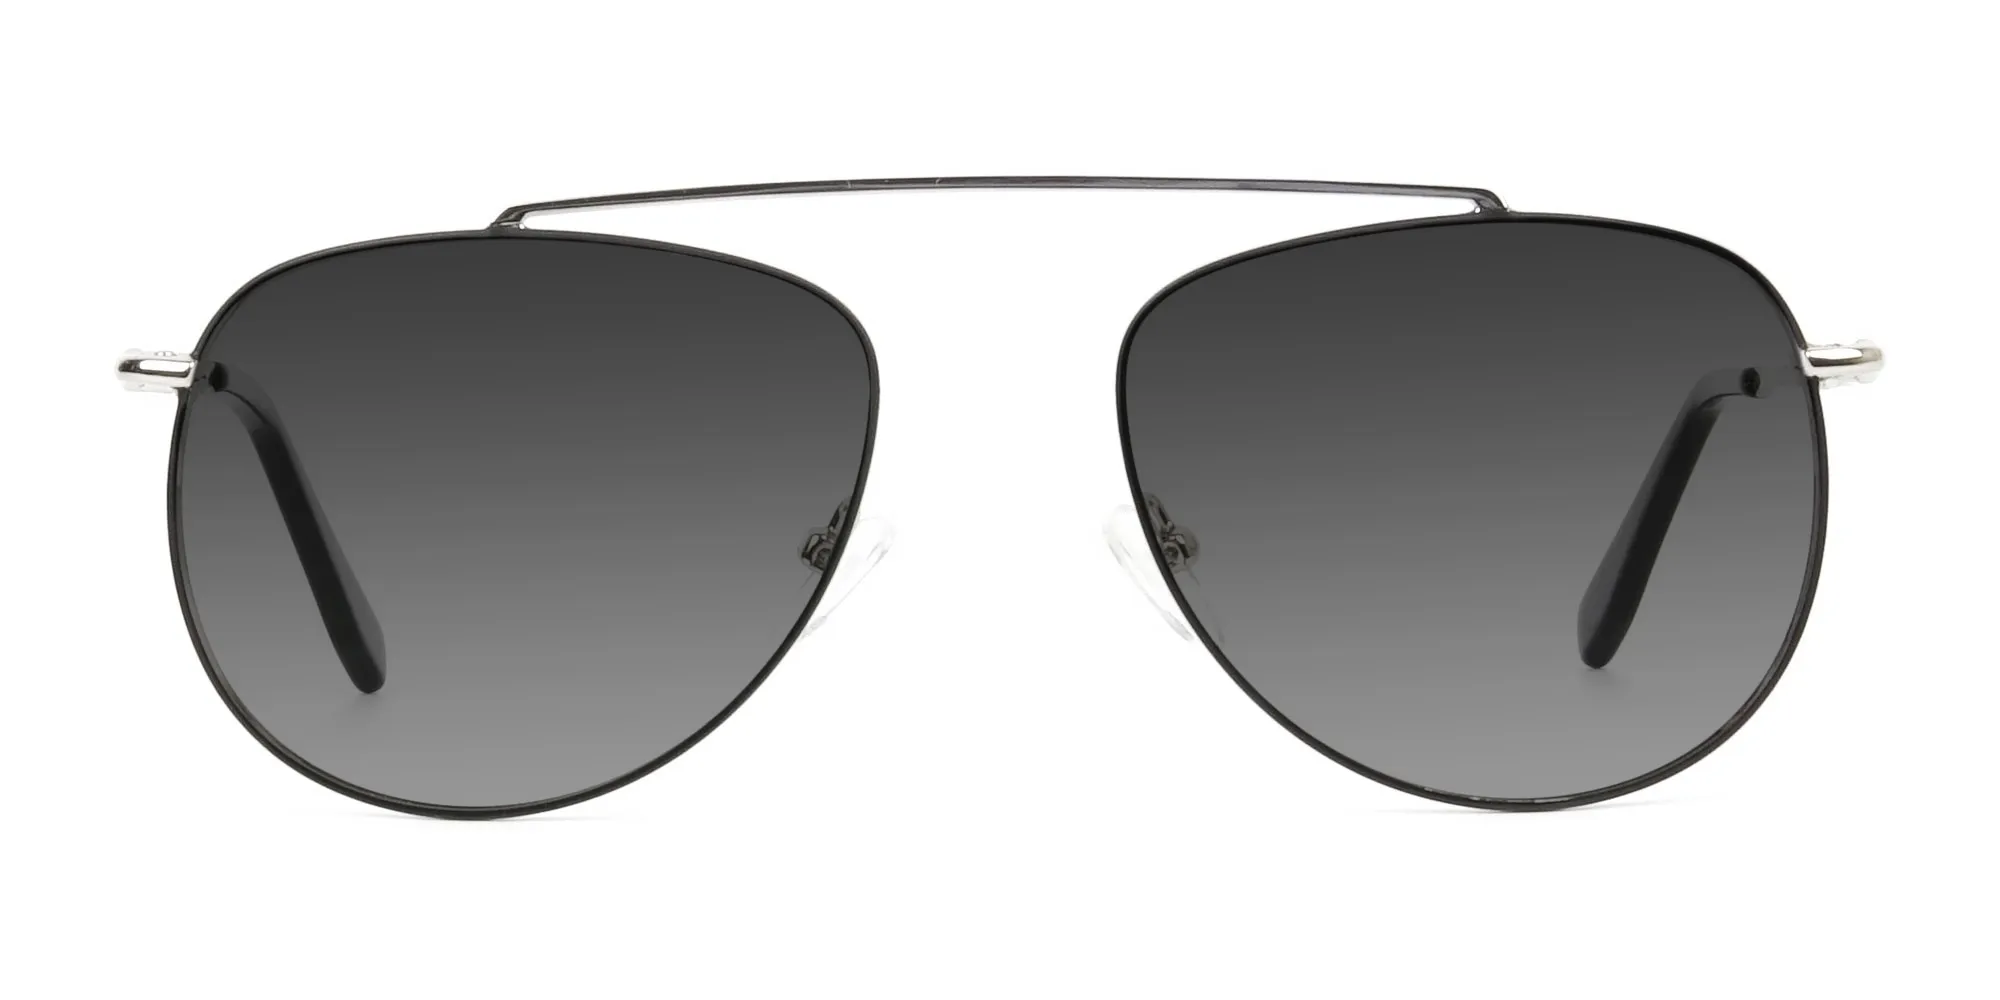 silver-green-thin-frame-pilot-Grey-tinted-sunglasses-2